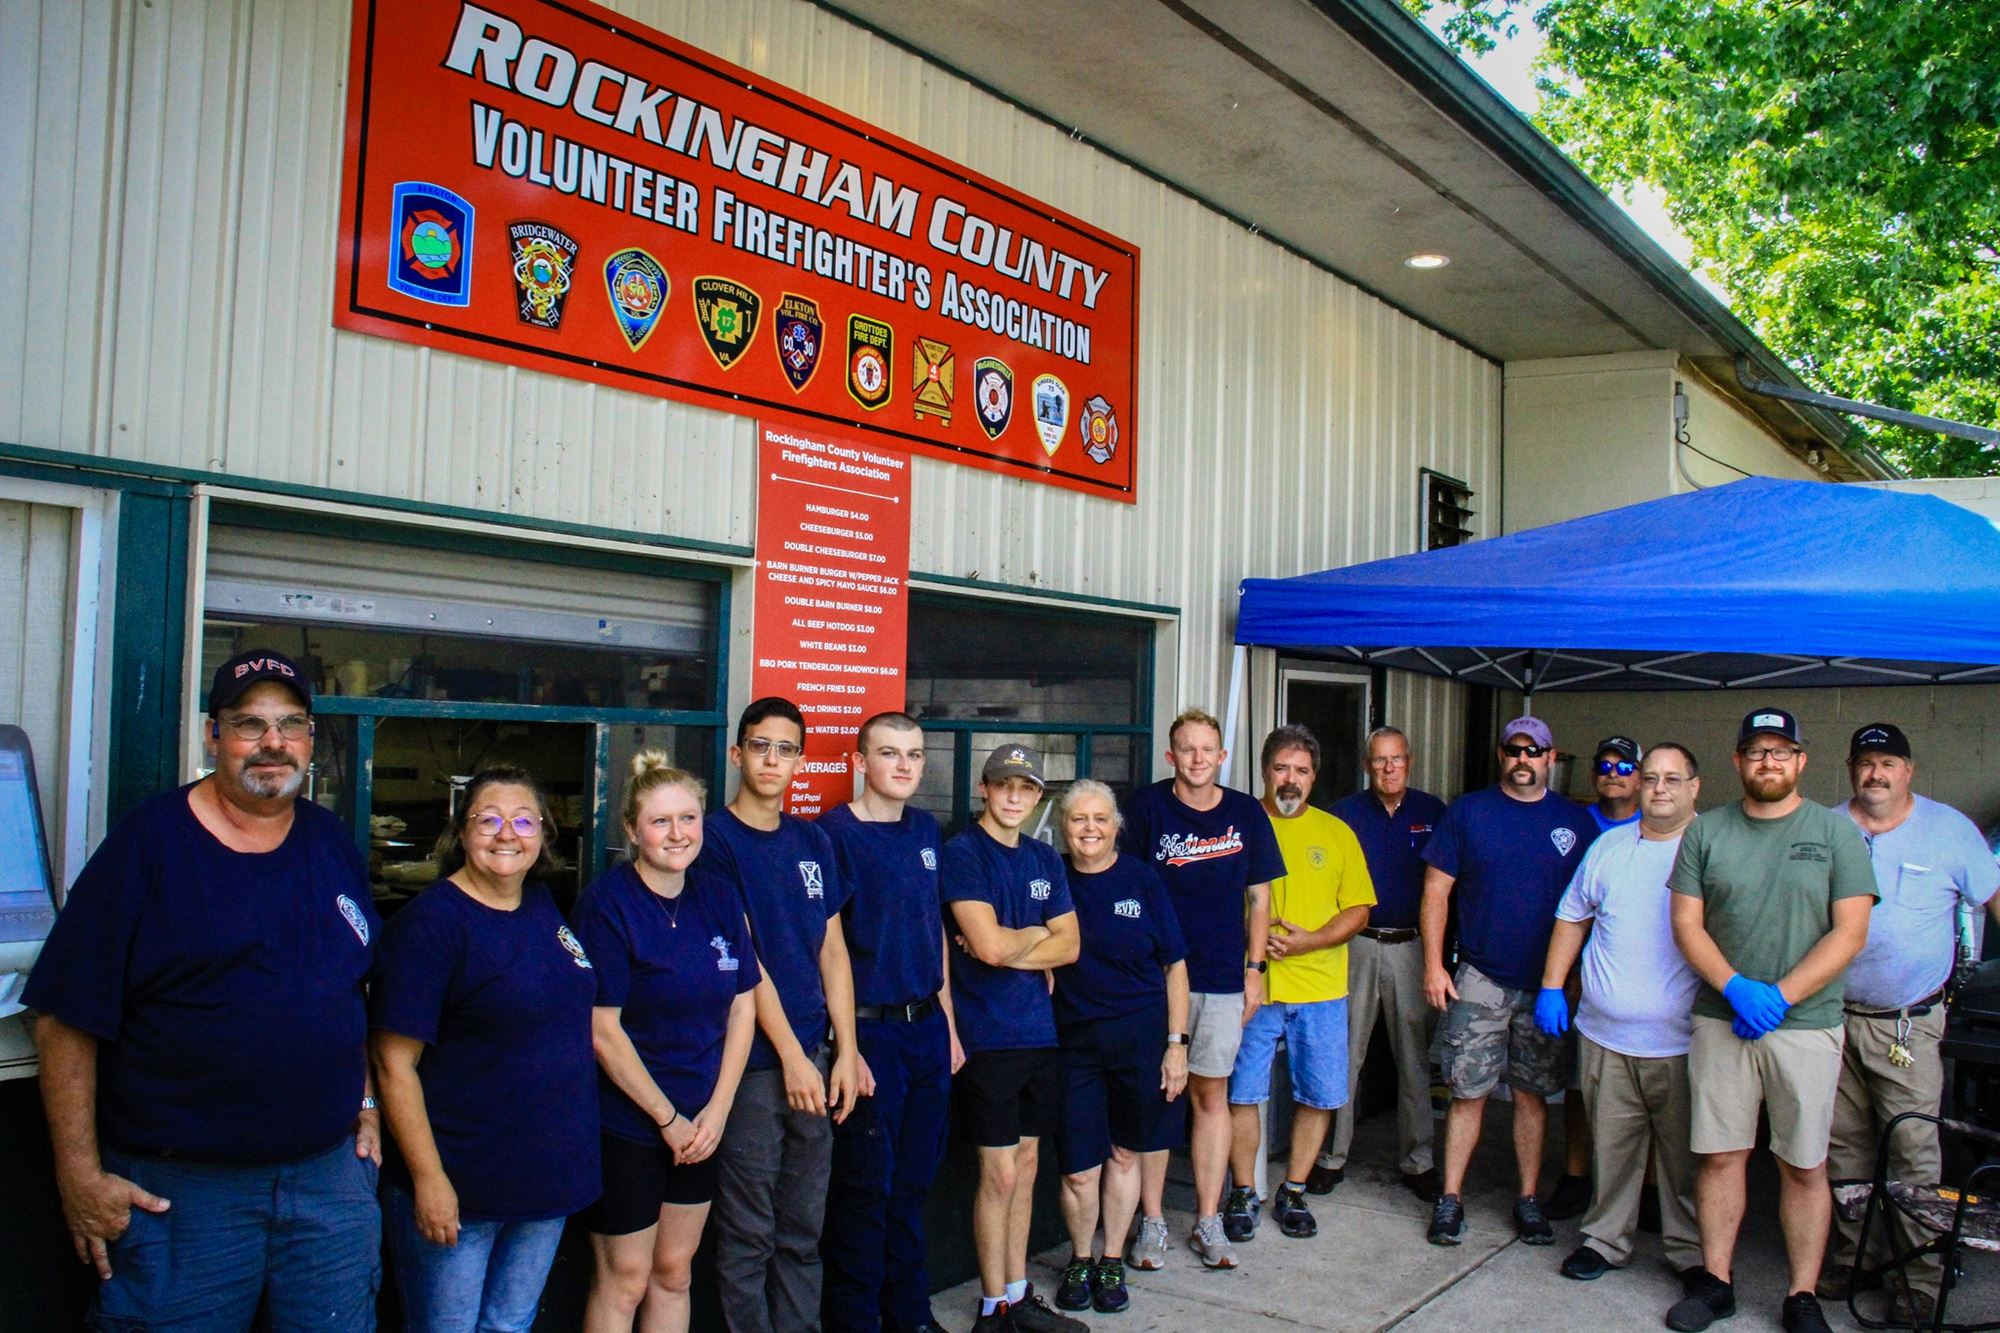 Rockingham County Volunteer Fire Association